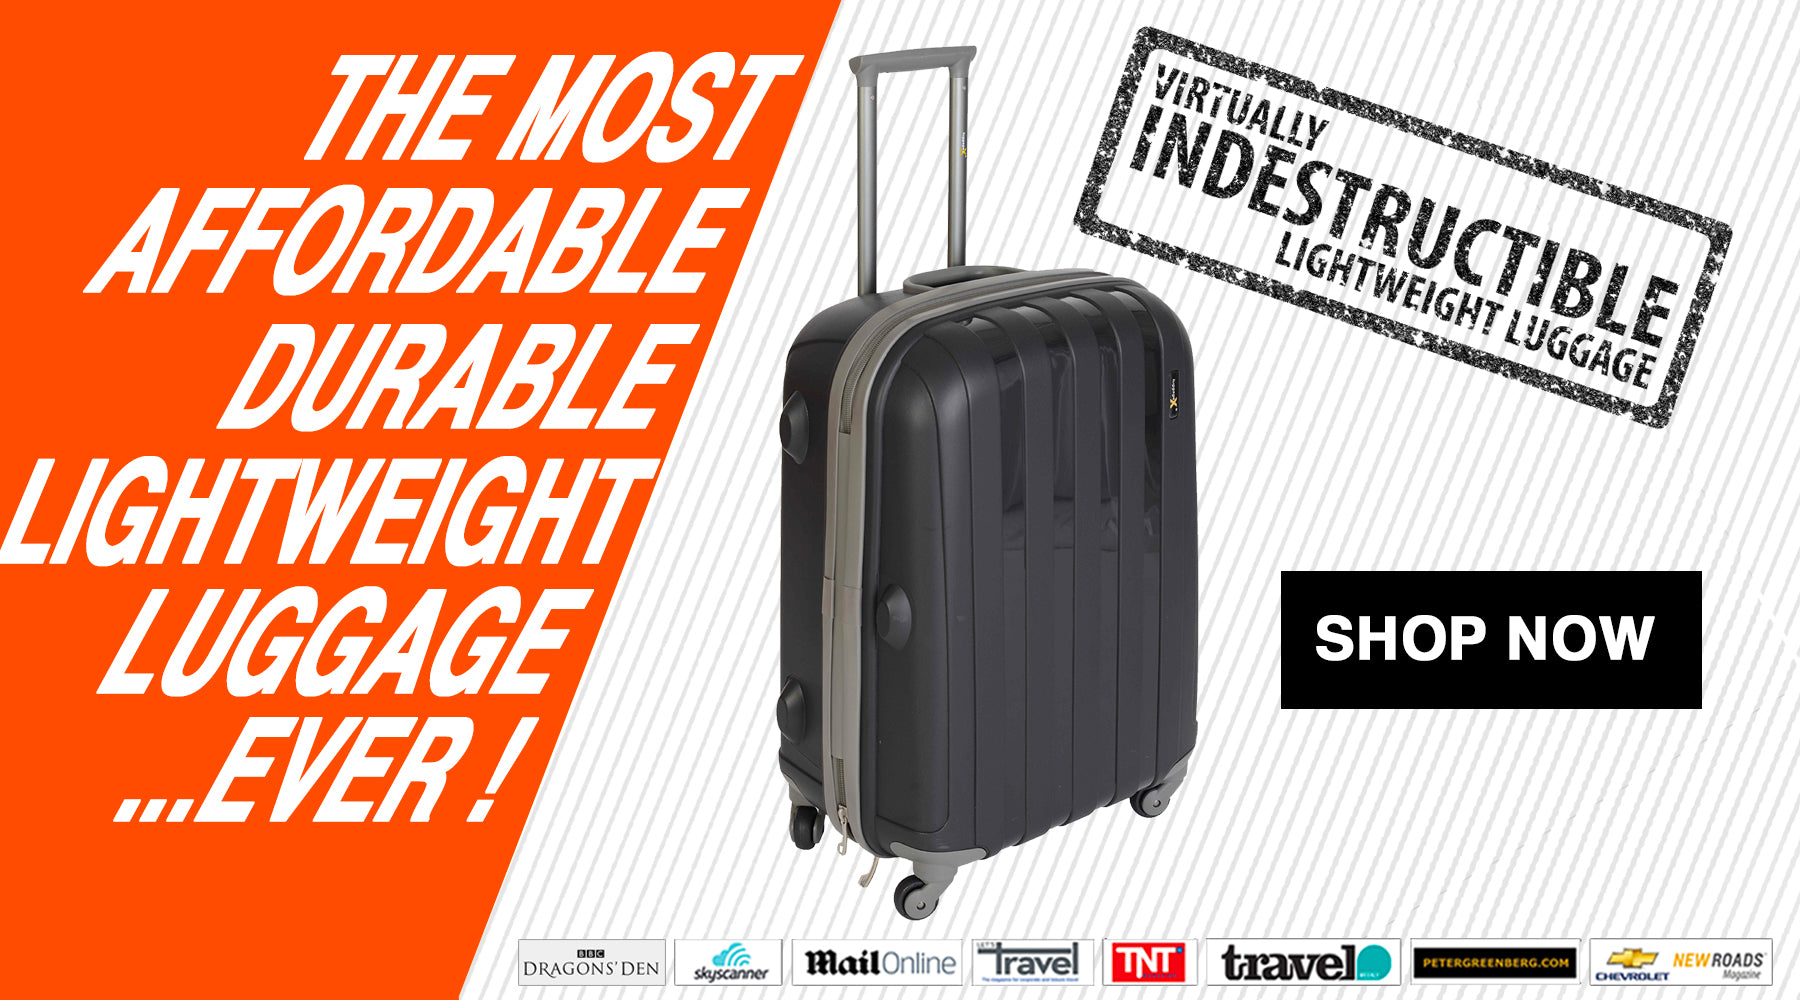 LuggageX : Virtually Indestructible Lightweight Luggage.